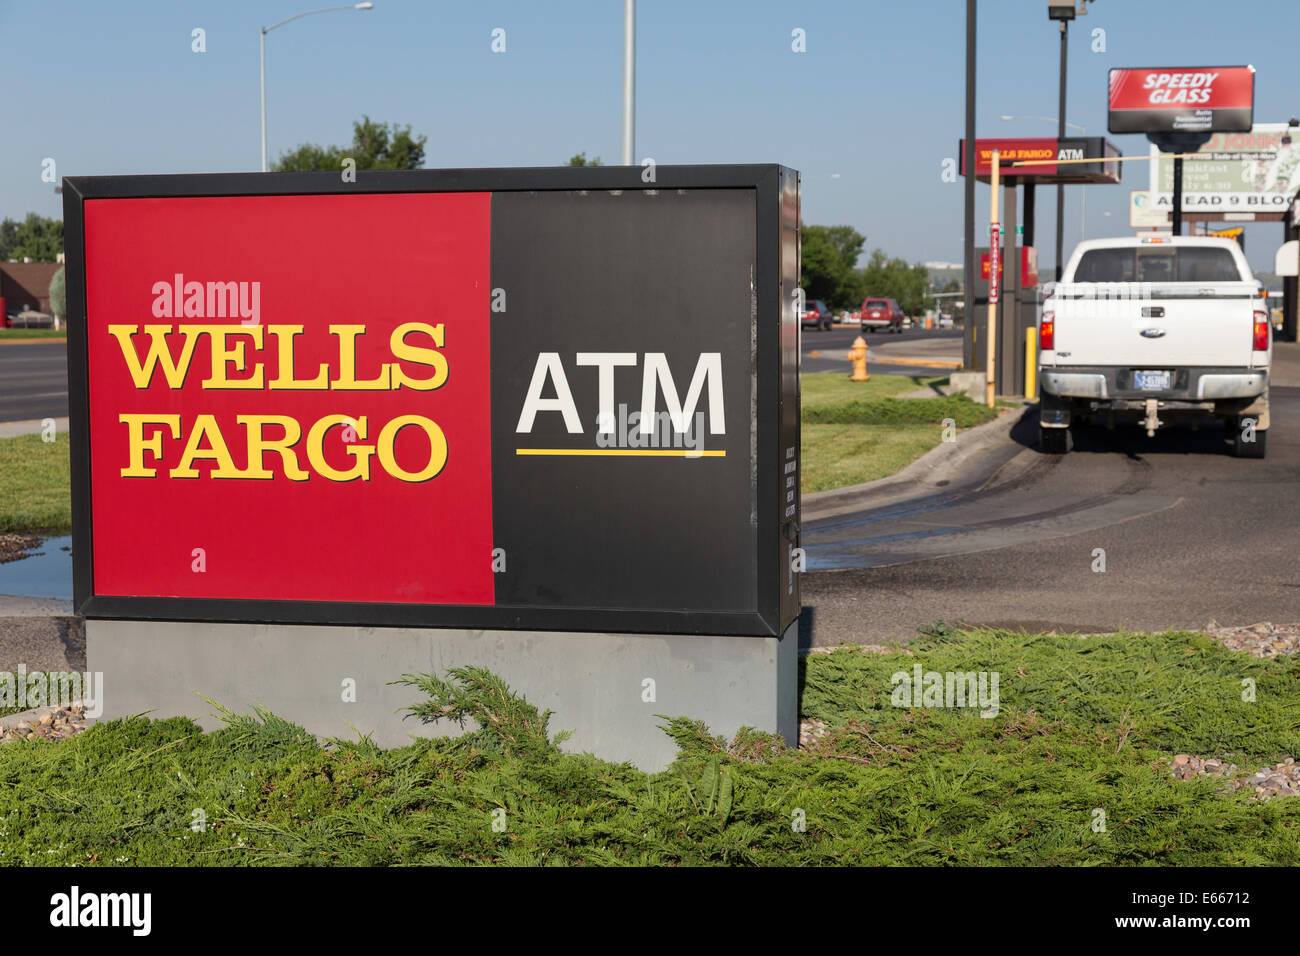 Wells Fargo Bank Drive-thru ATM, USA Stock Photo